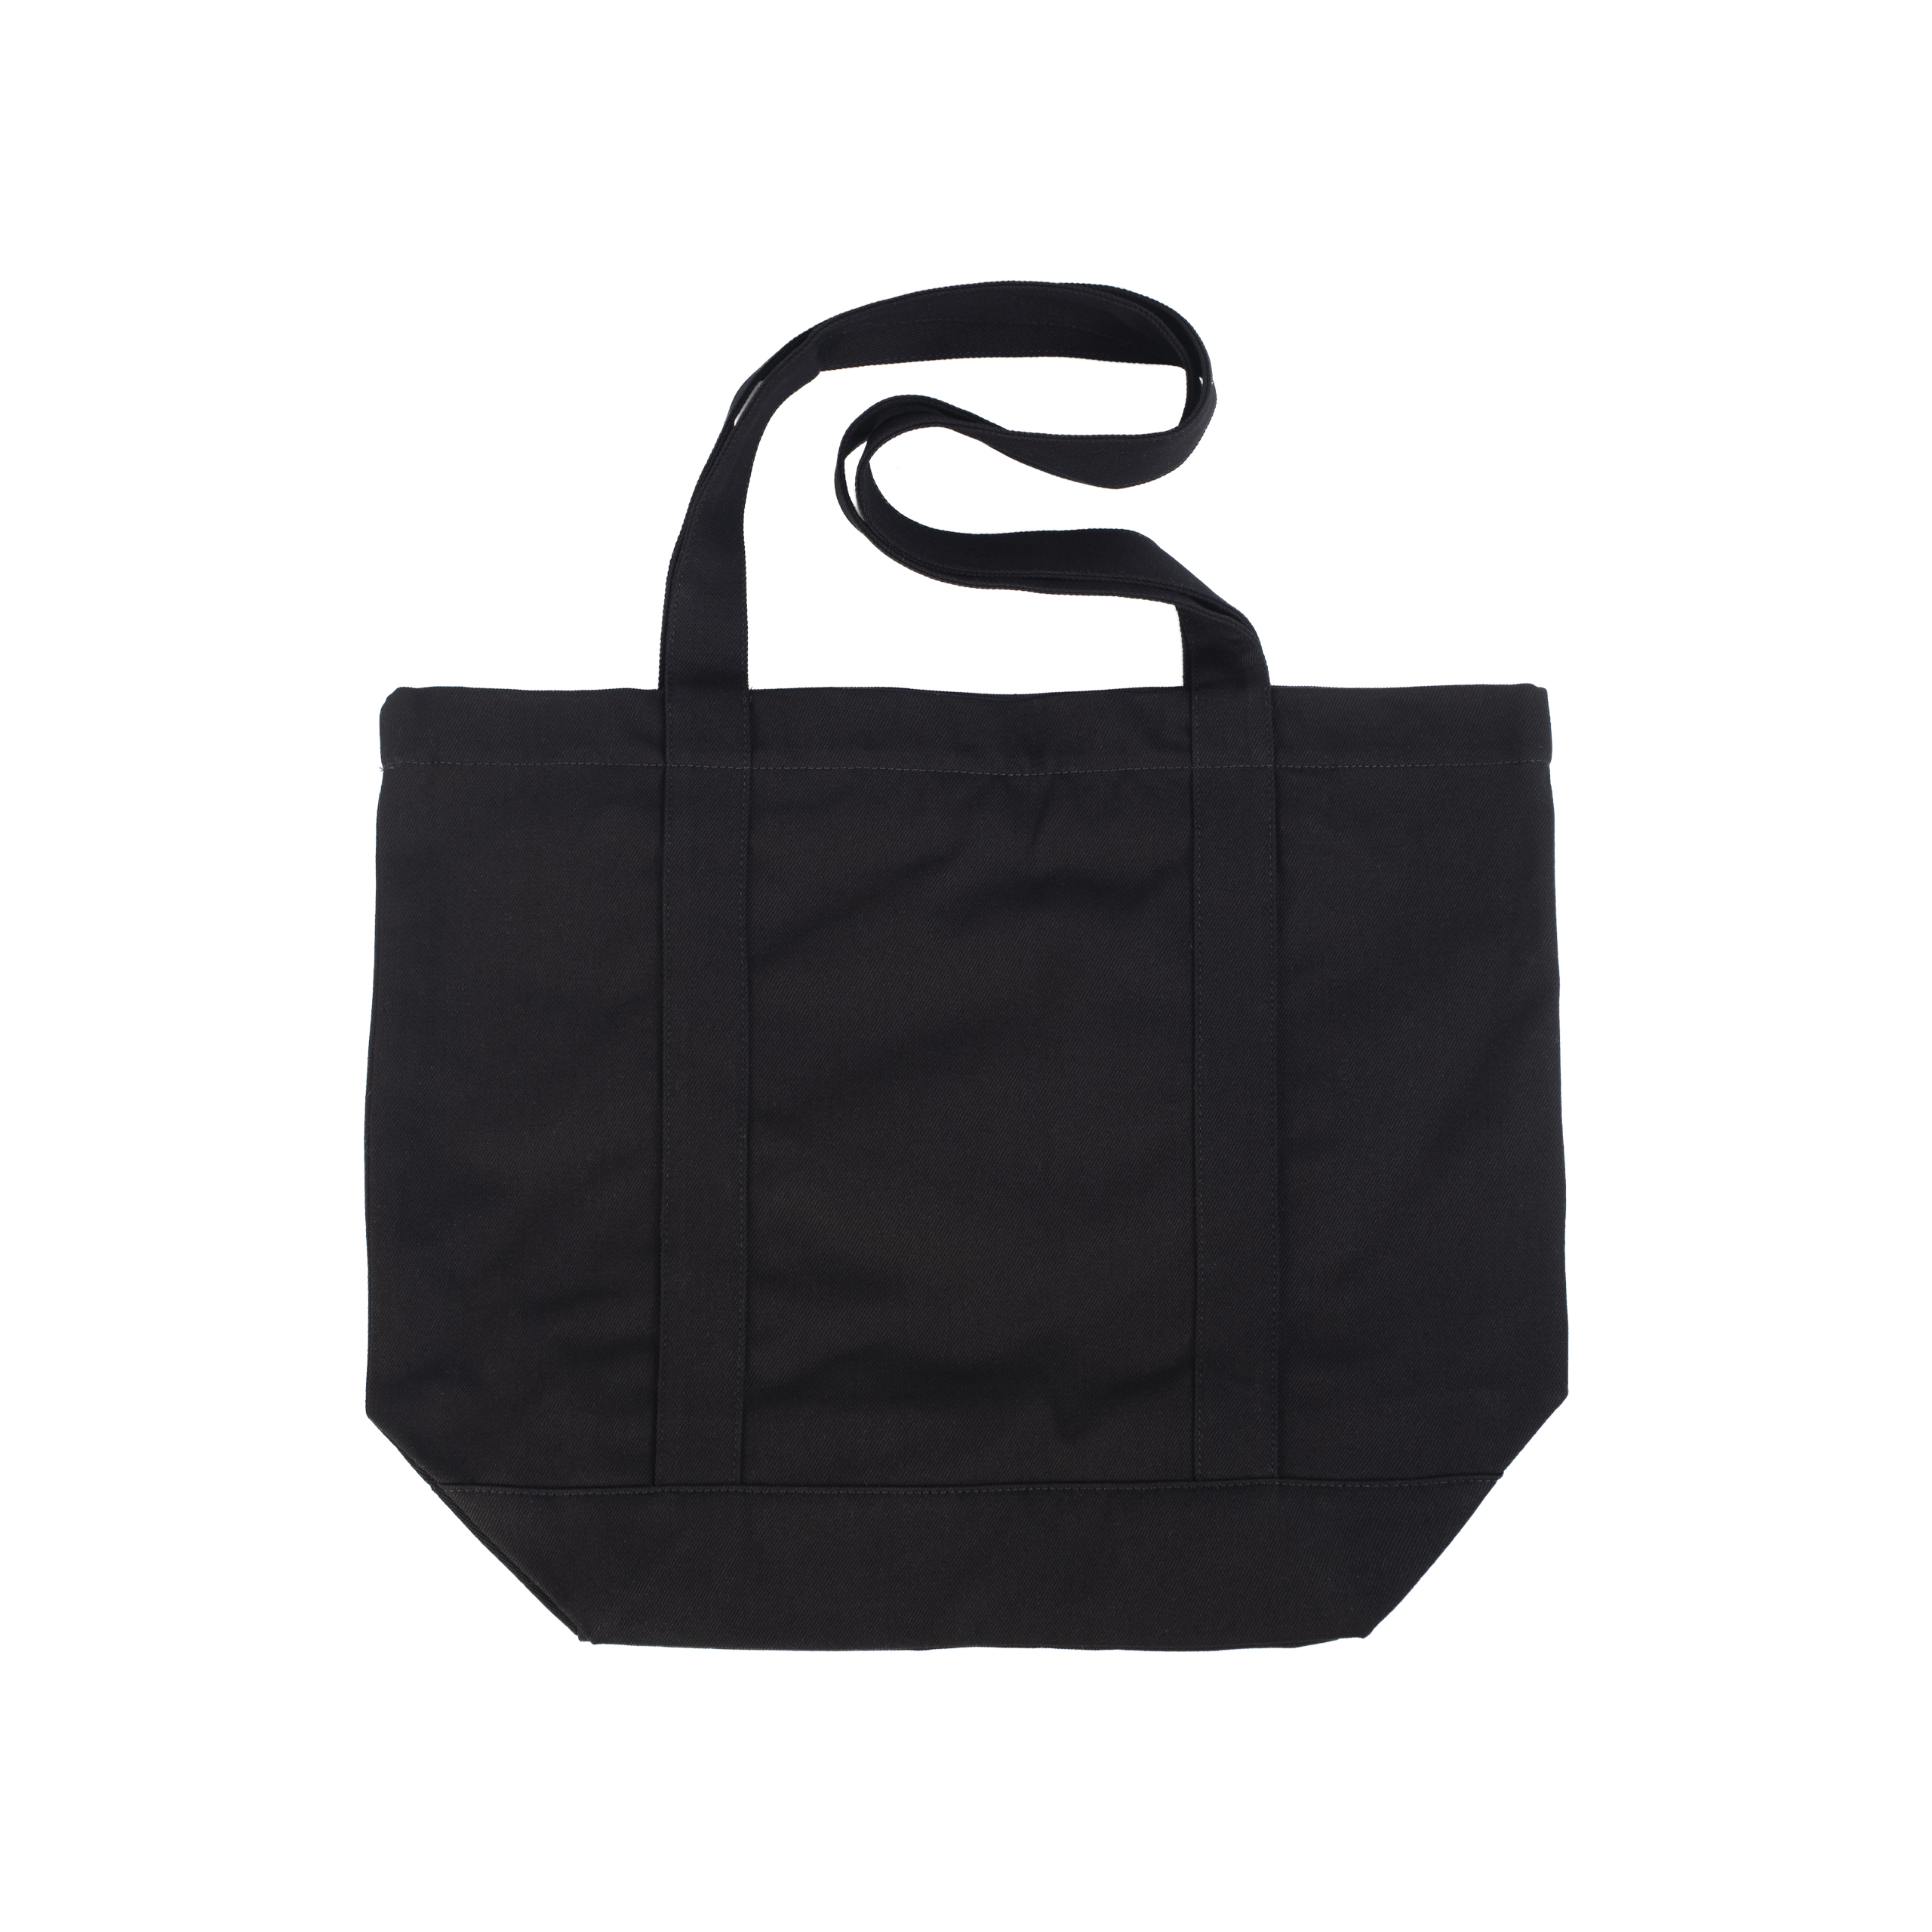 Джинсовая сумка-шоппер Raf Simons x Smiley с патчем Raf Simons 224-935-11000-0099, размер One Size - фото 3